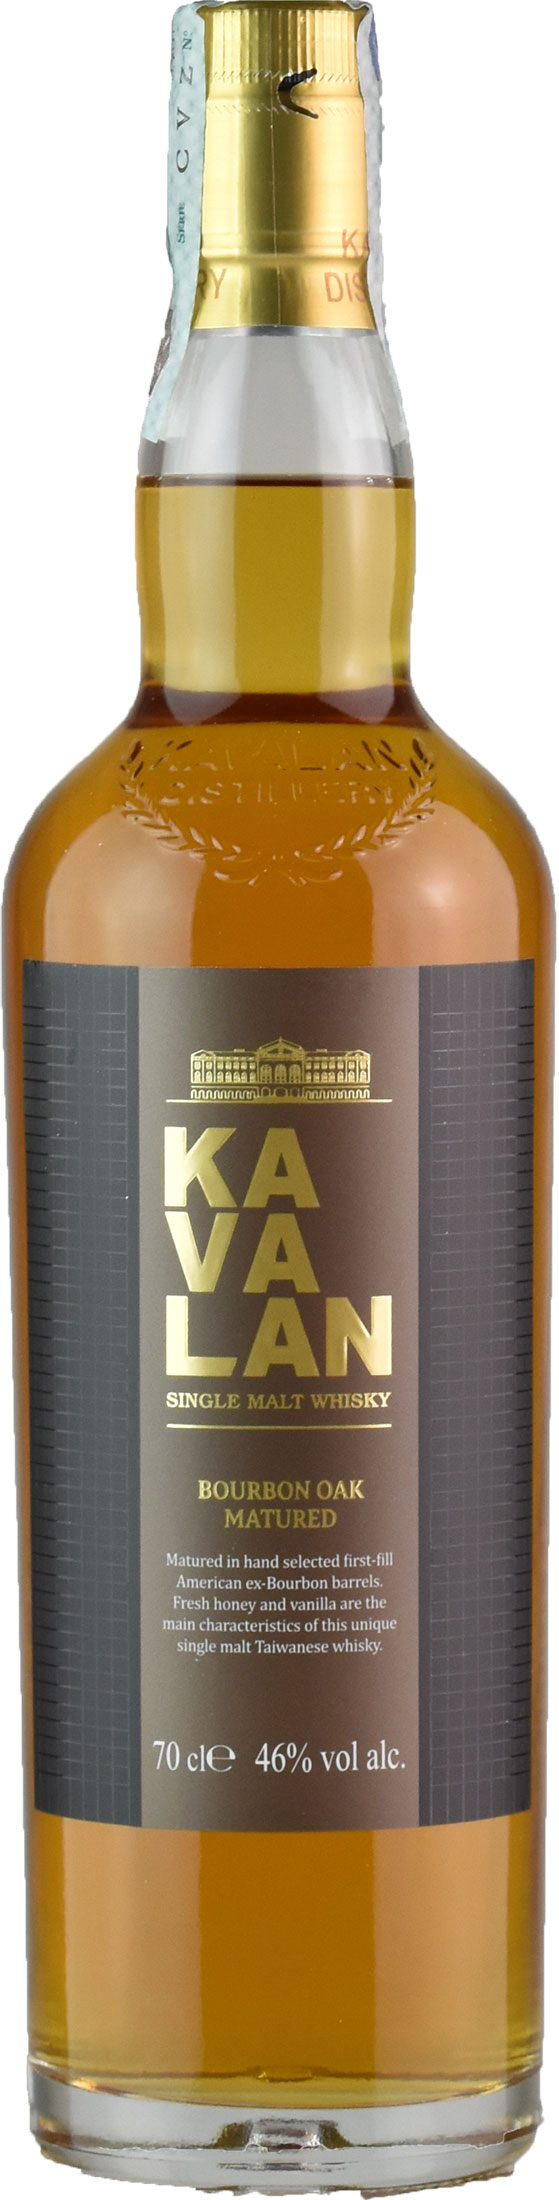 Kavalan Bourbon Oak Matured Whisky